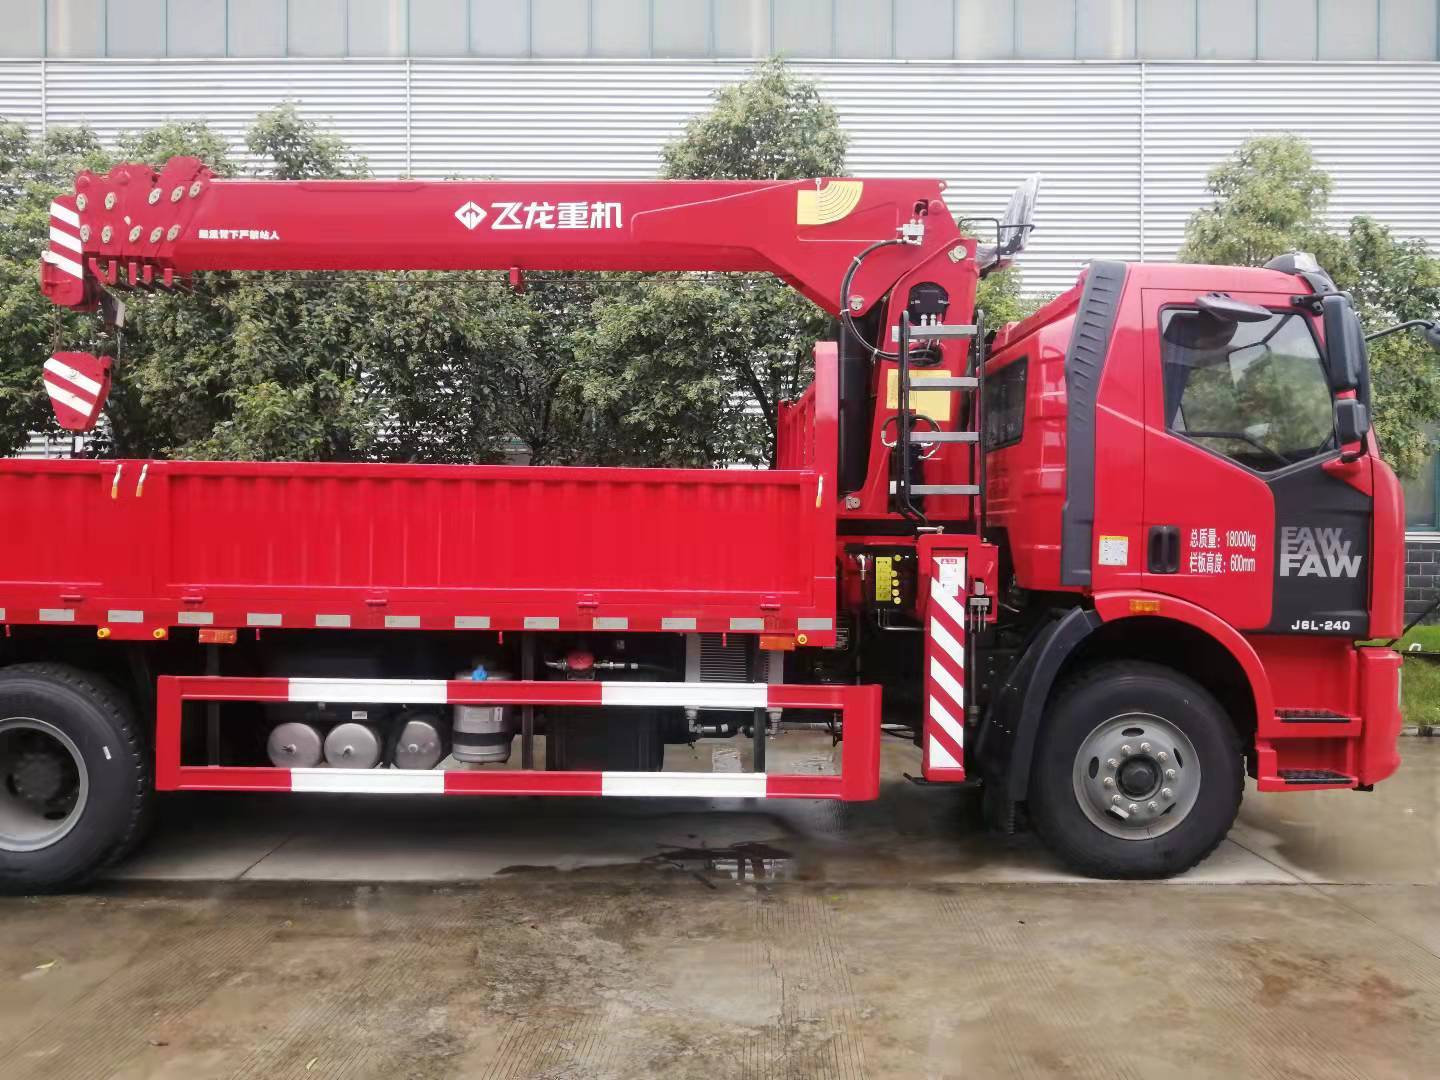 truck mounted crane hydraulic cranes straight boom crane china brand